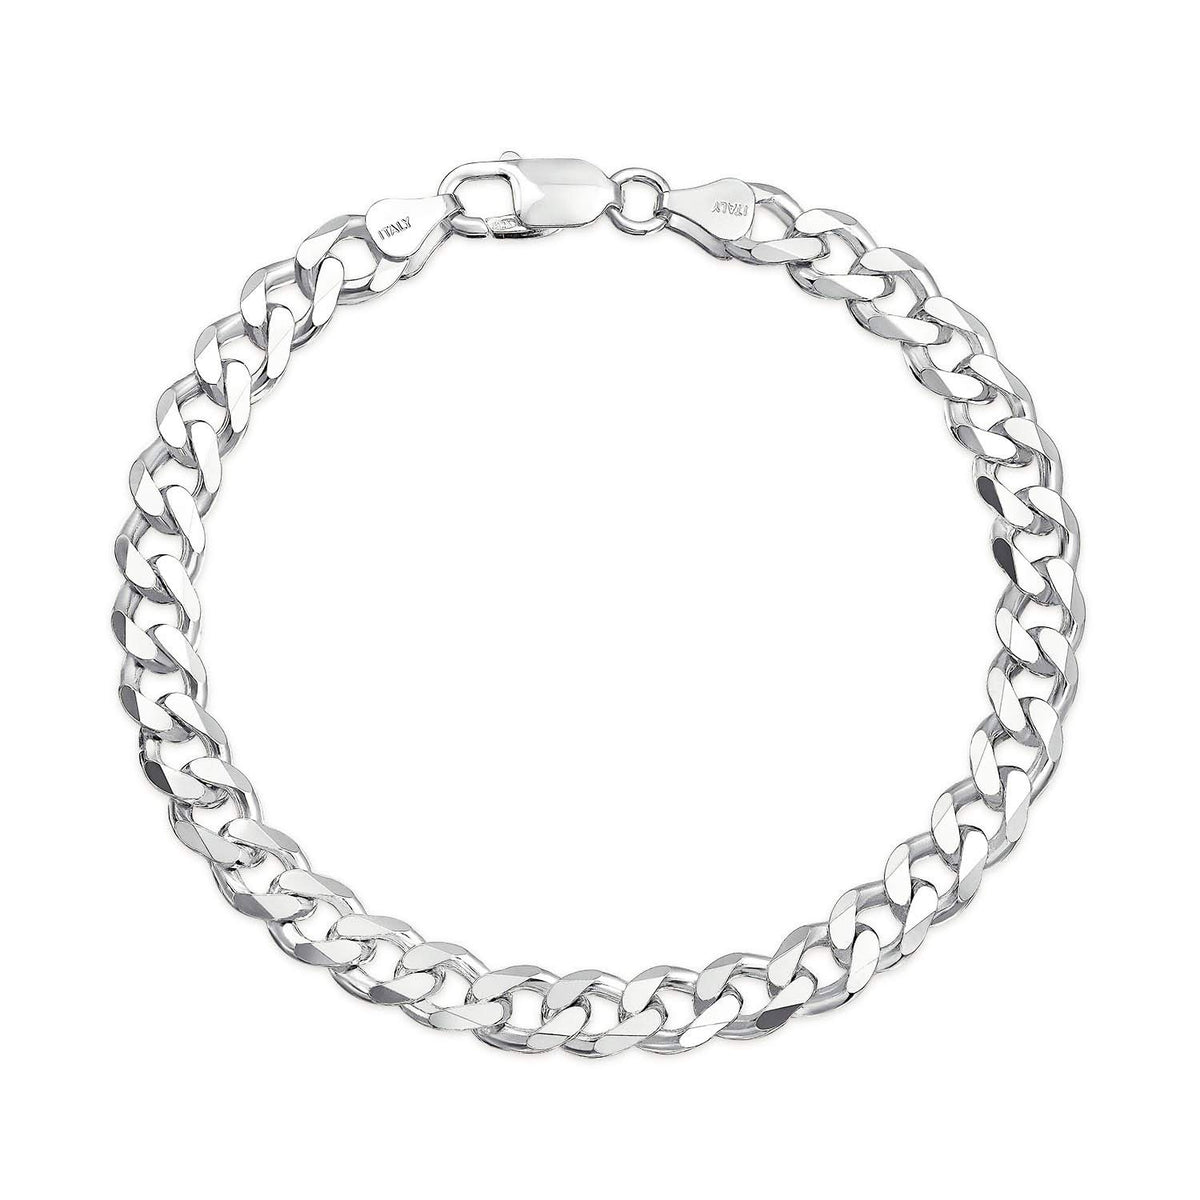 Buy Silver Bracelet for Girls online at Best Price starting@ ₹ 700 only.